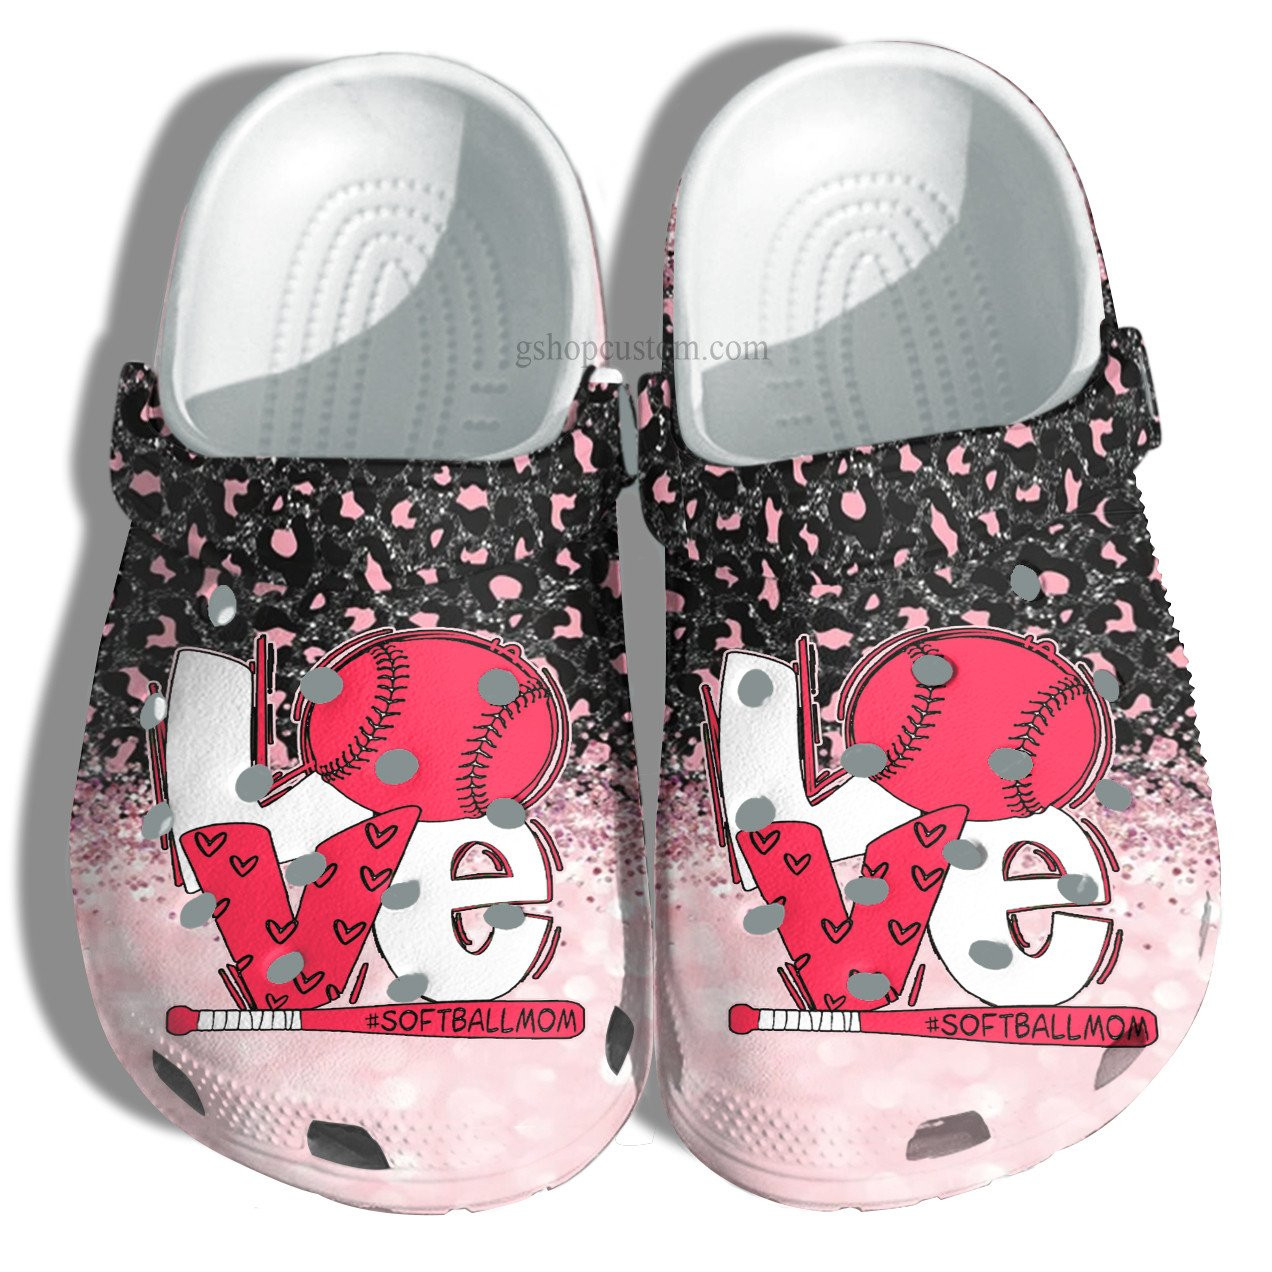 Love Softball Mom Leopard Pinky Croc Shoes Gift Mommy- Softball Love Crocs Shoes Gift Mother Day